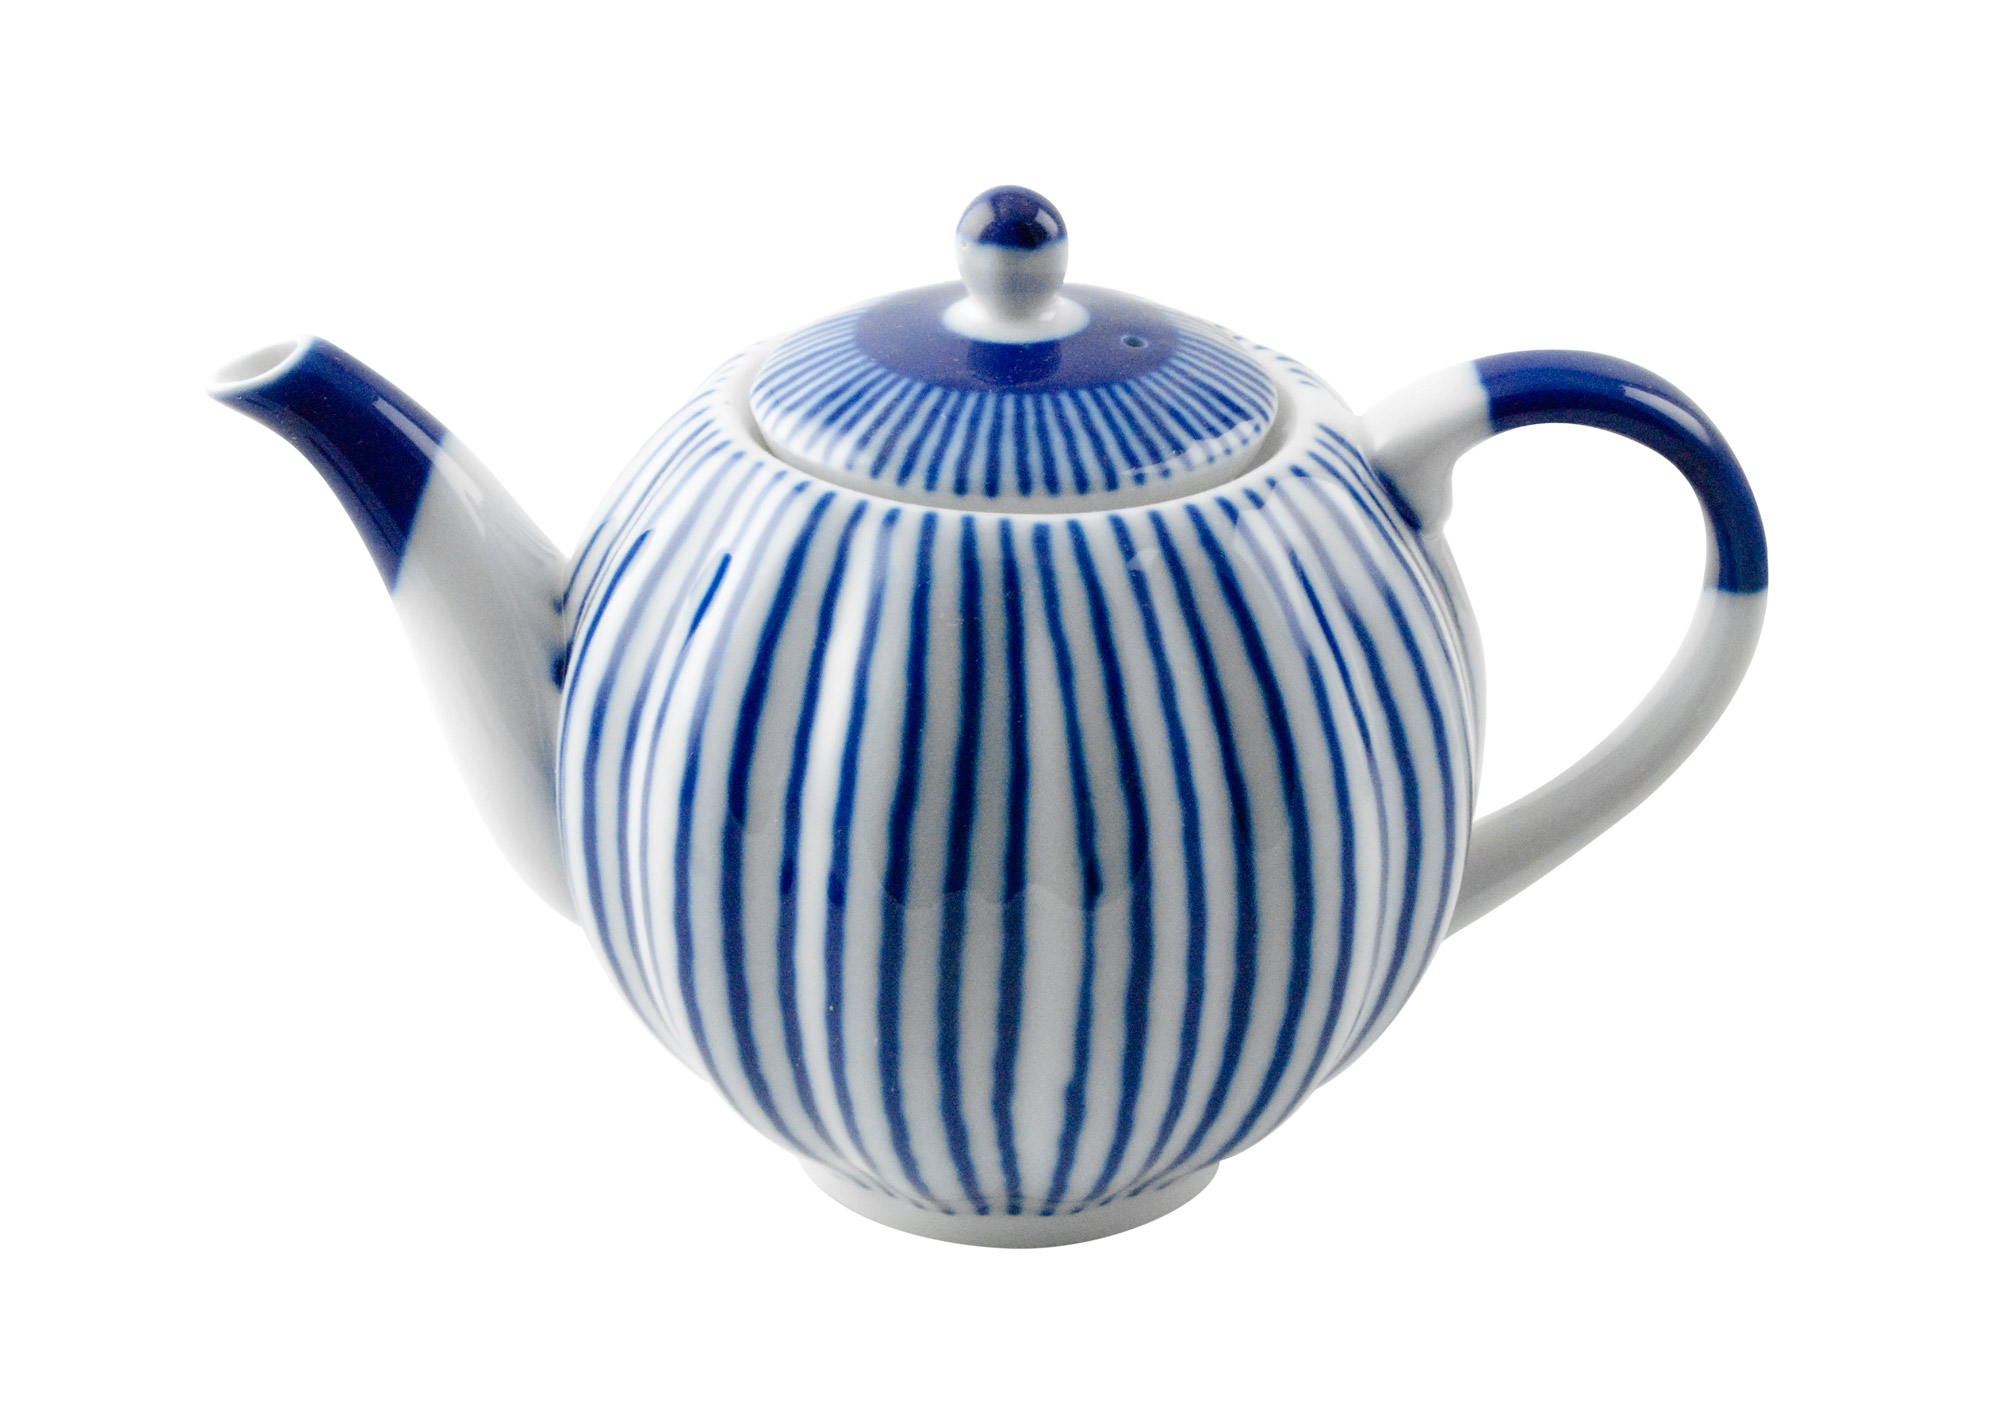 Buy Breakfast Teapot, 3 cup at GoldenCockerel.com